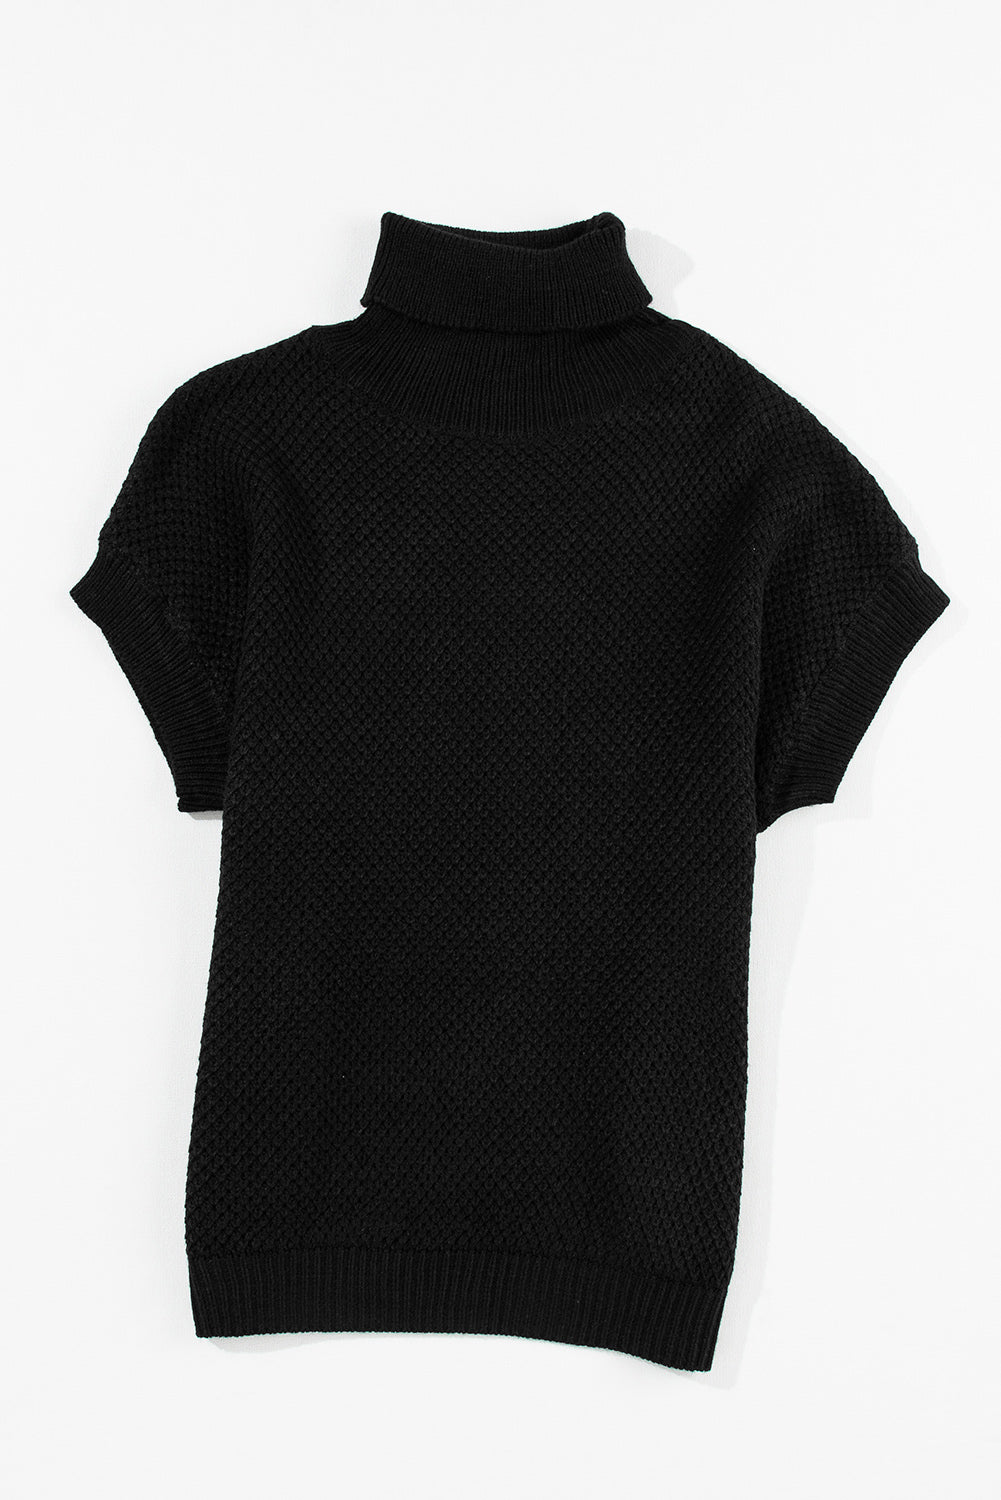 Black Turtleneck Textured Short Sleeve Sweater